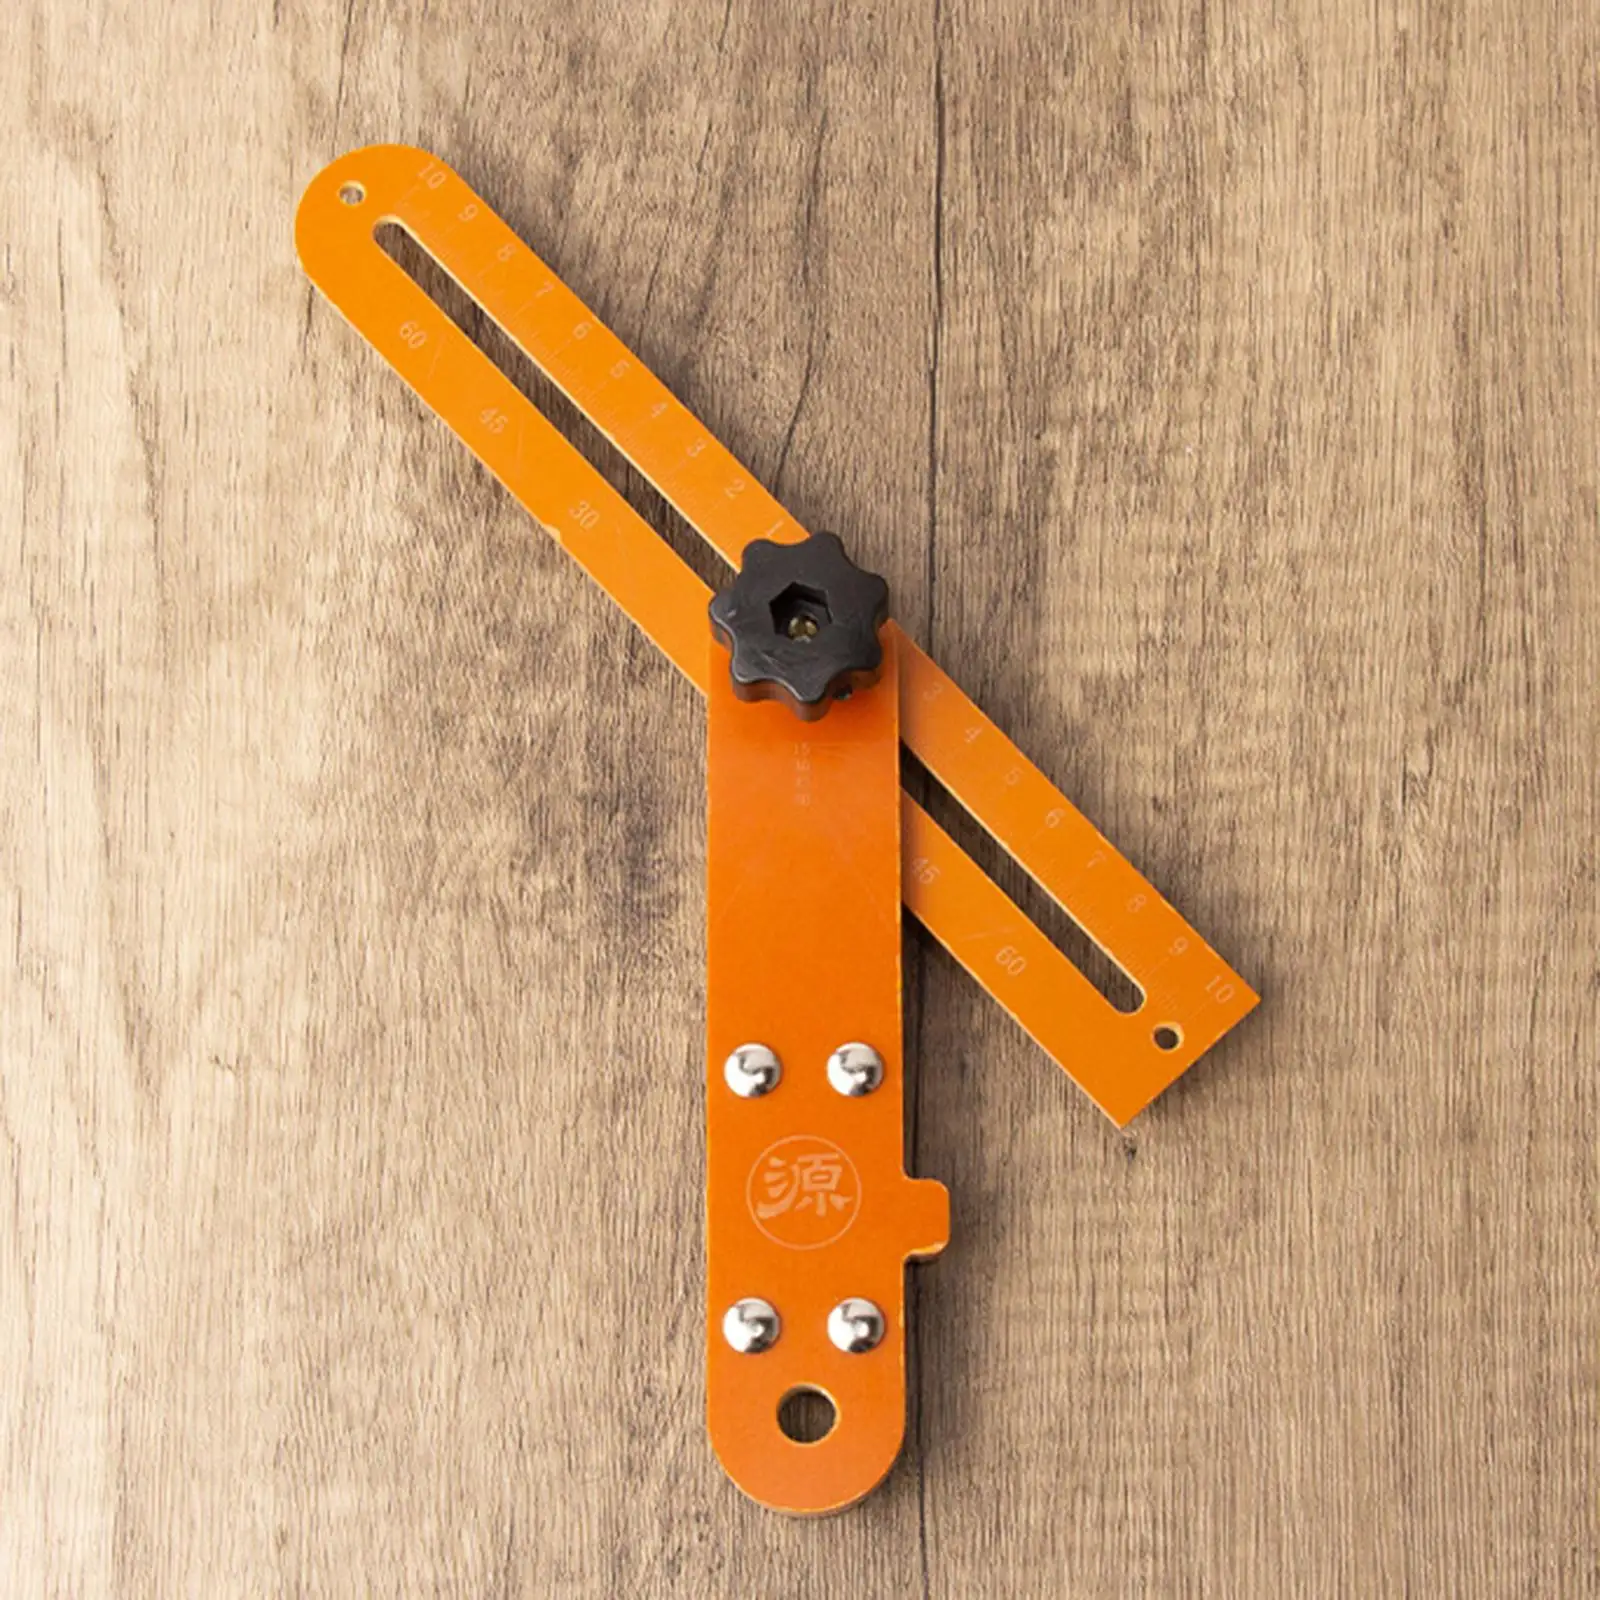 T Bevel Sliding Angle Ruler Protractor Adjustable Gauge Measure Layout for Carpentry Building Furniture Woodworking Carpenters